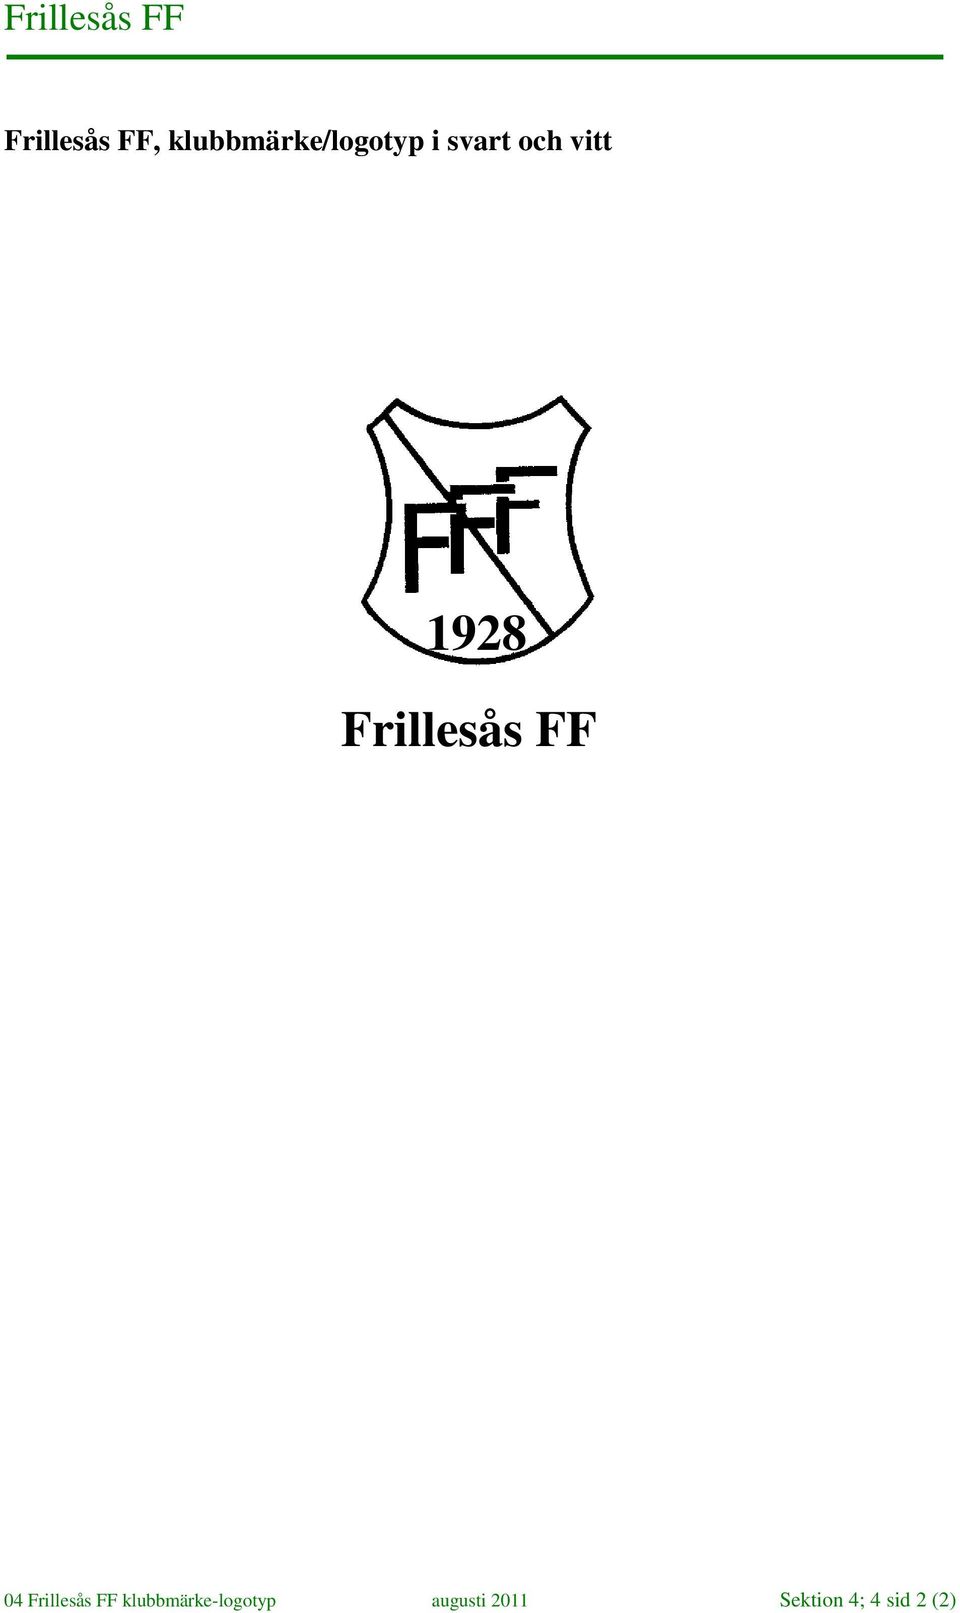 04 Frillesås FF klubbmärke-logotyp